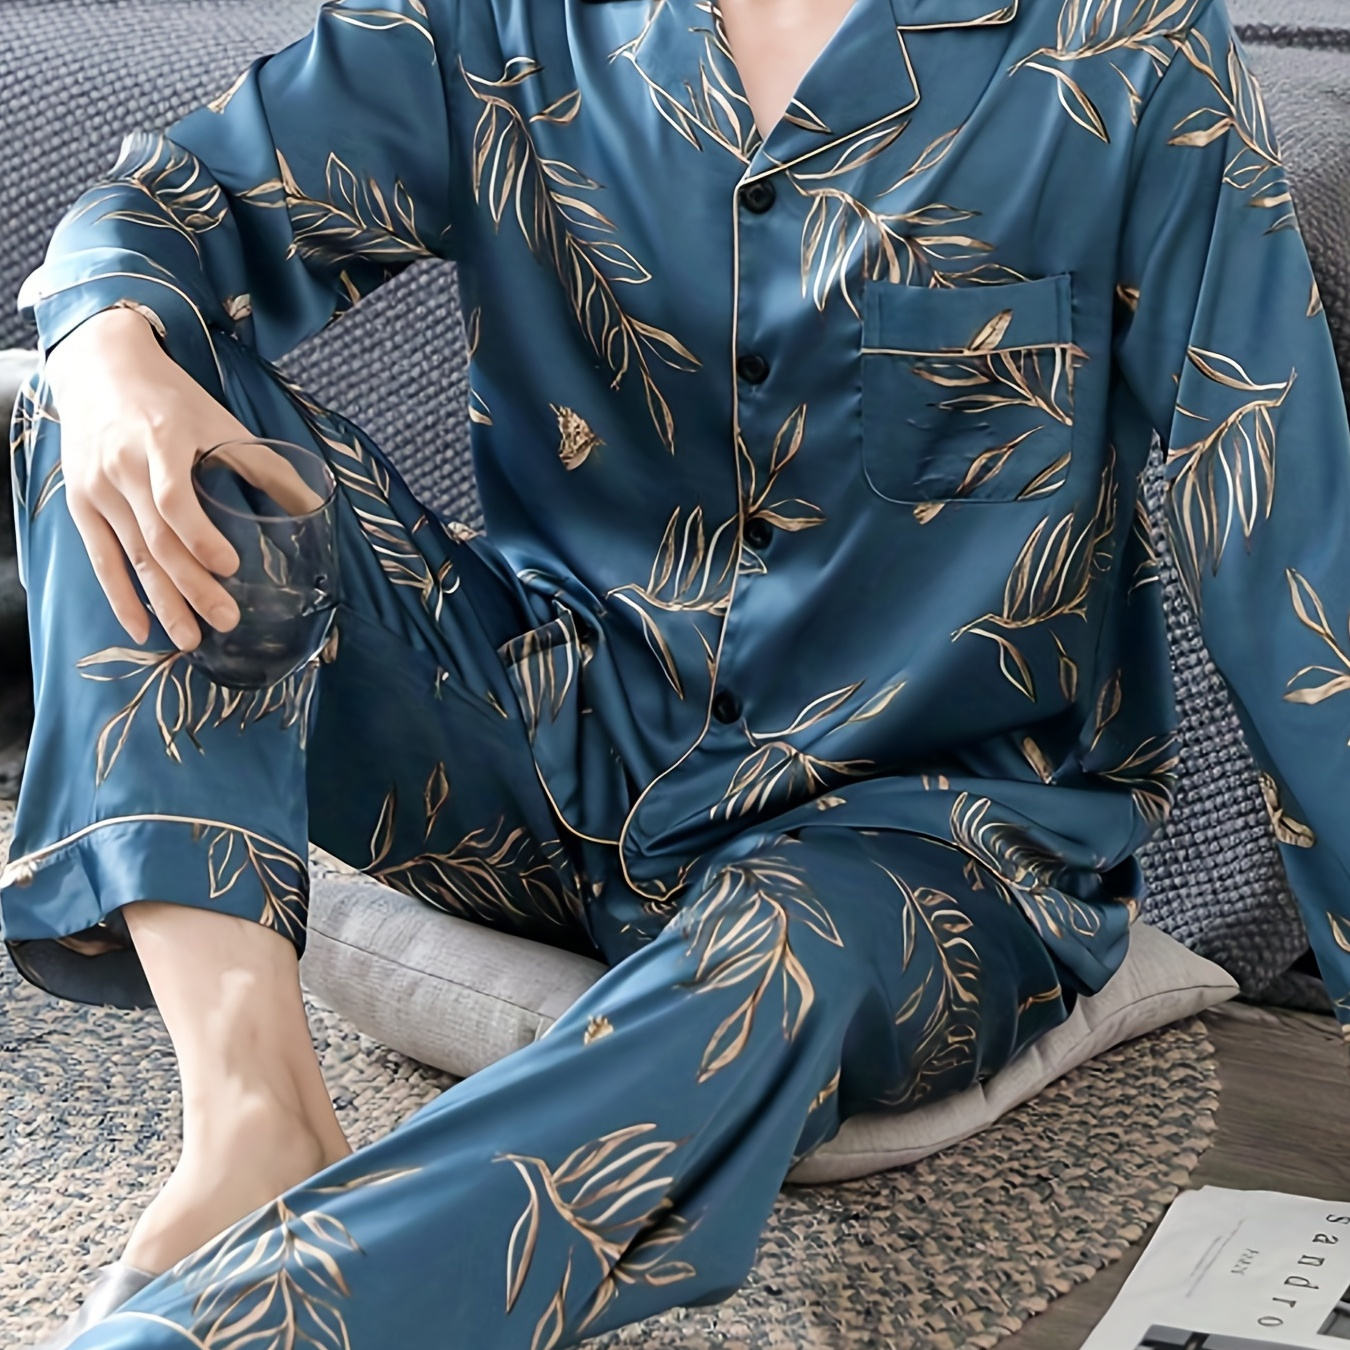 

Men's Ice Silk Leaf Print Fashion Loungewear Set For Spring Autumn, Long Sleeve Button Down Shirt Top & Long Pants Set, 2pcs Pajamas Set Casual Outfits